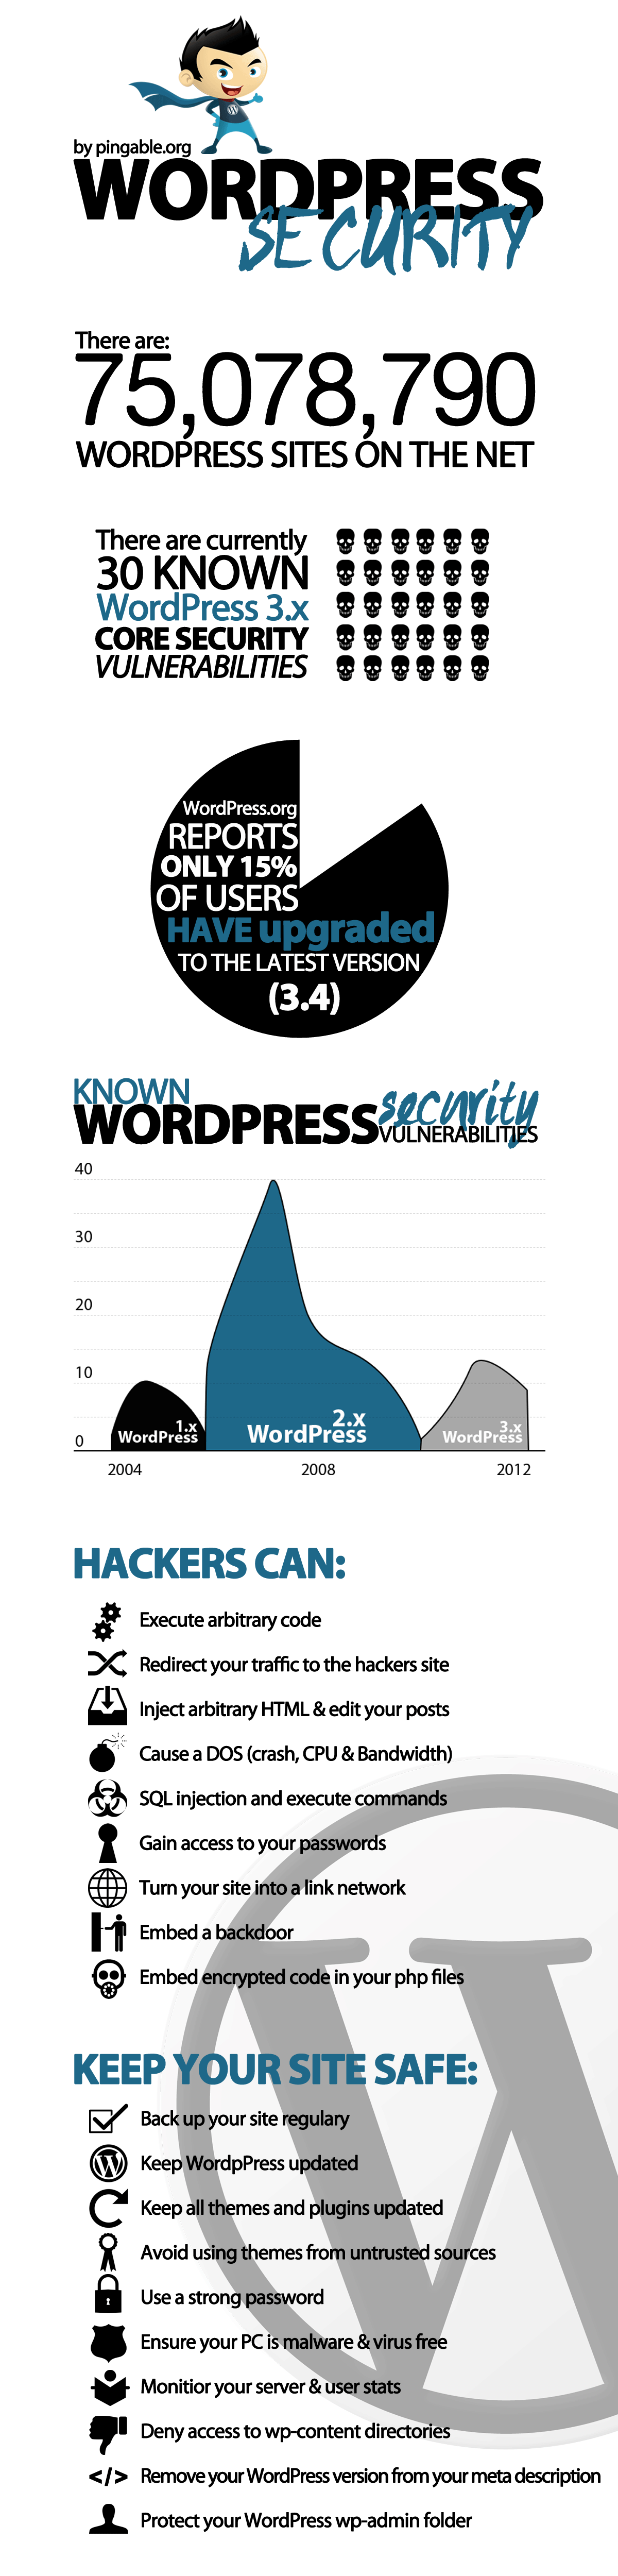 wordpress security 